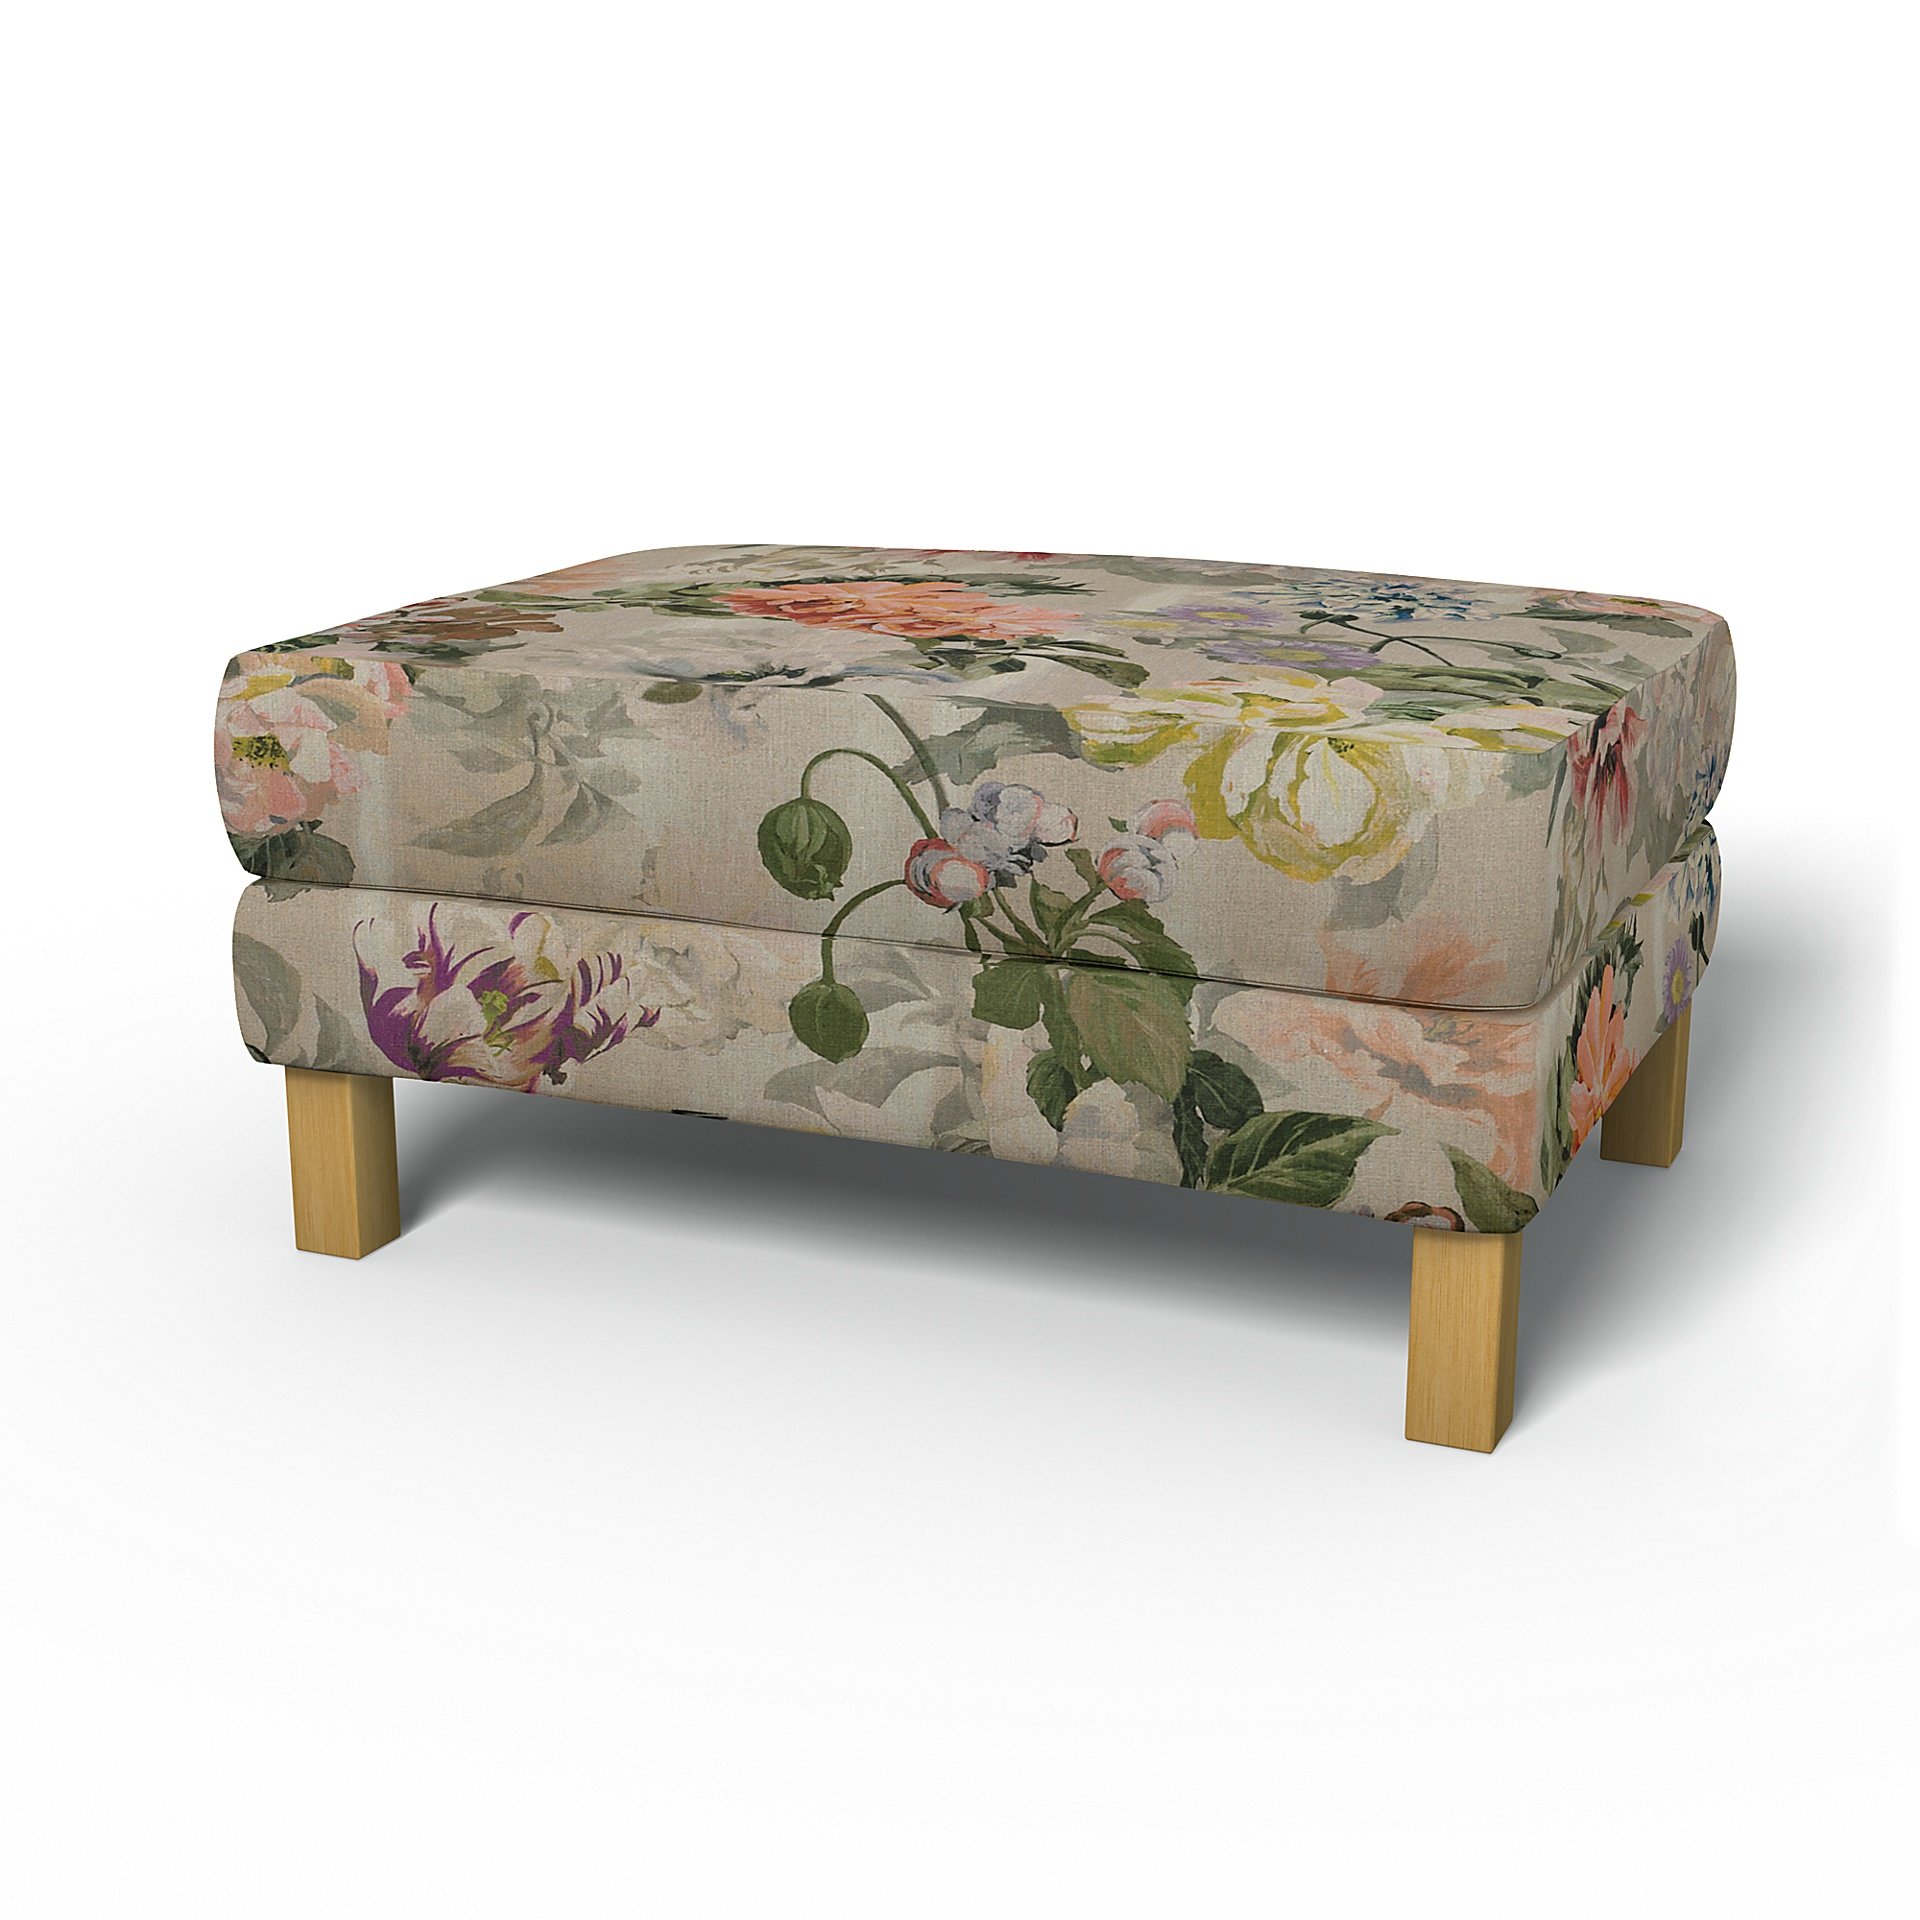 IKEA - Karlstad Footstool Cover, Delft Flower - Tuberose, Linen - Bemz